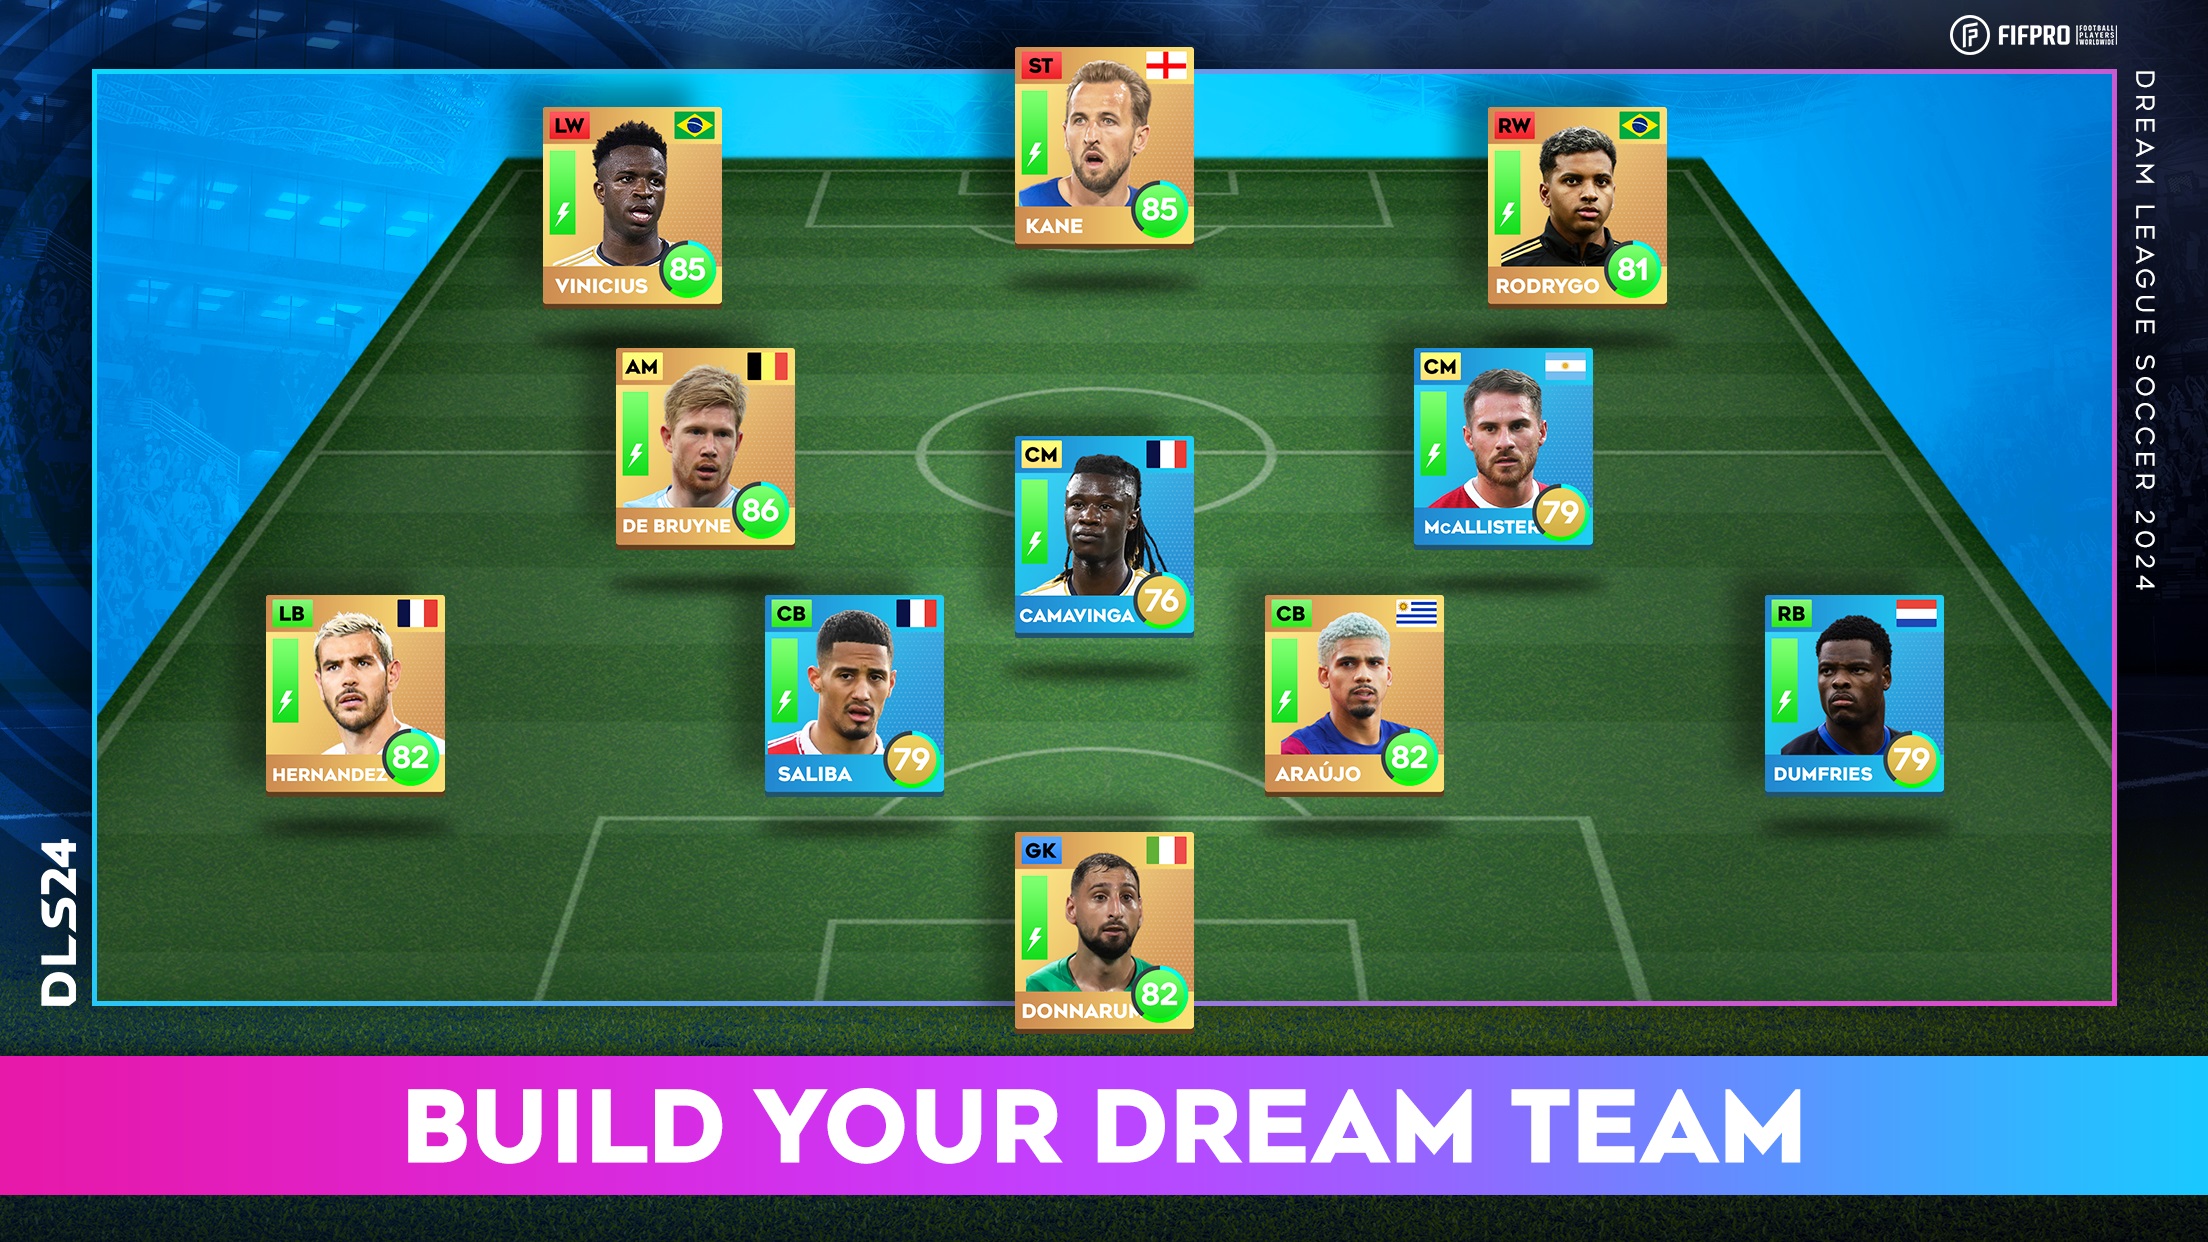 The Best Dream Team in DLS 24